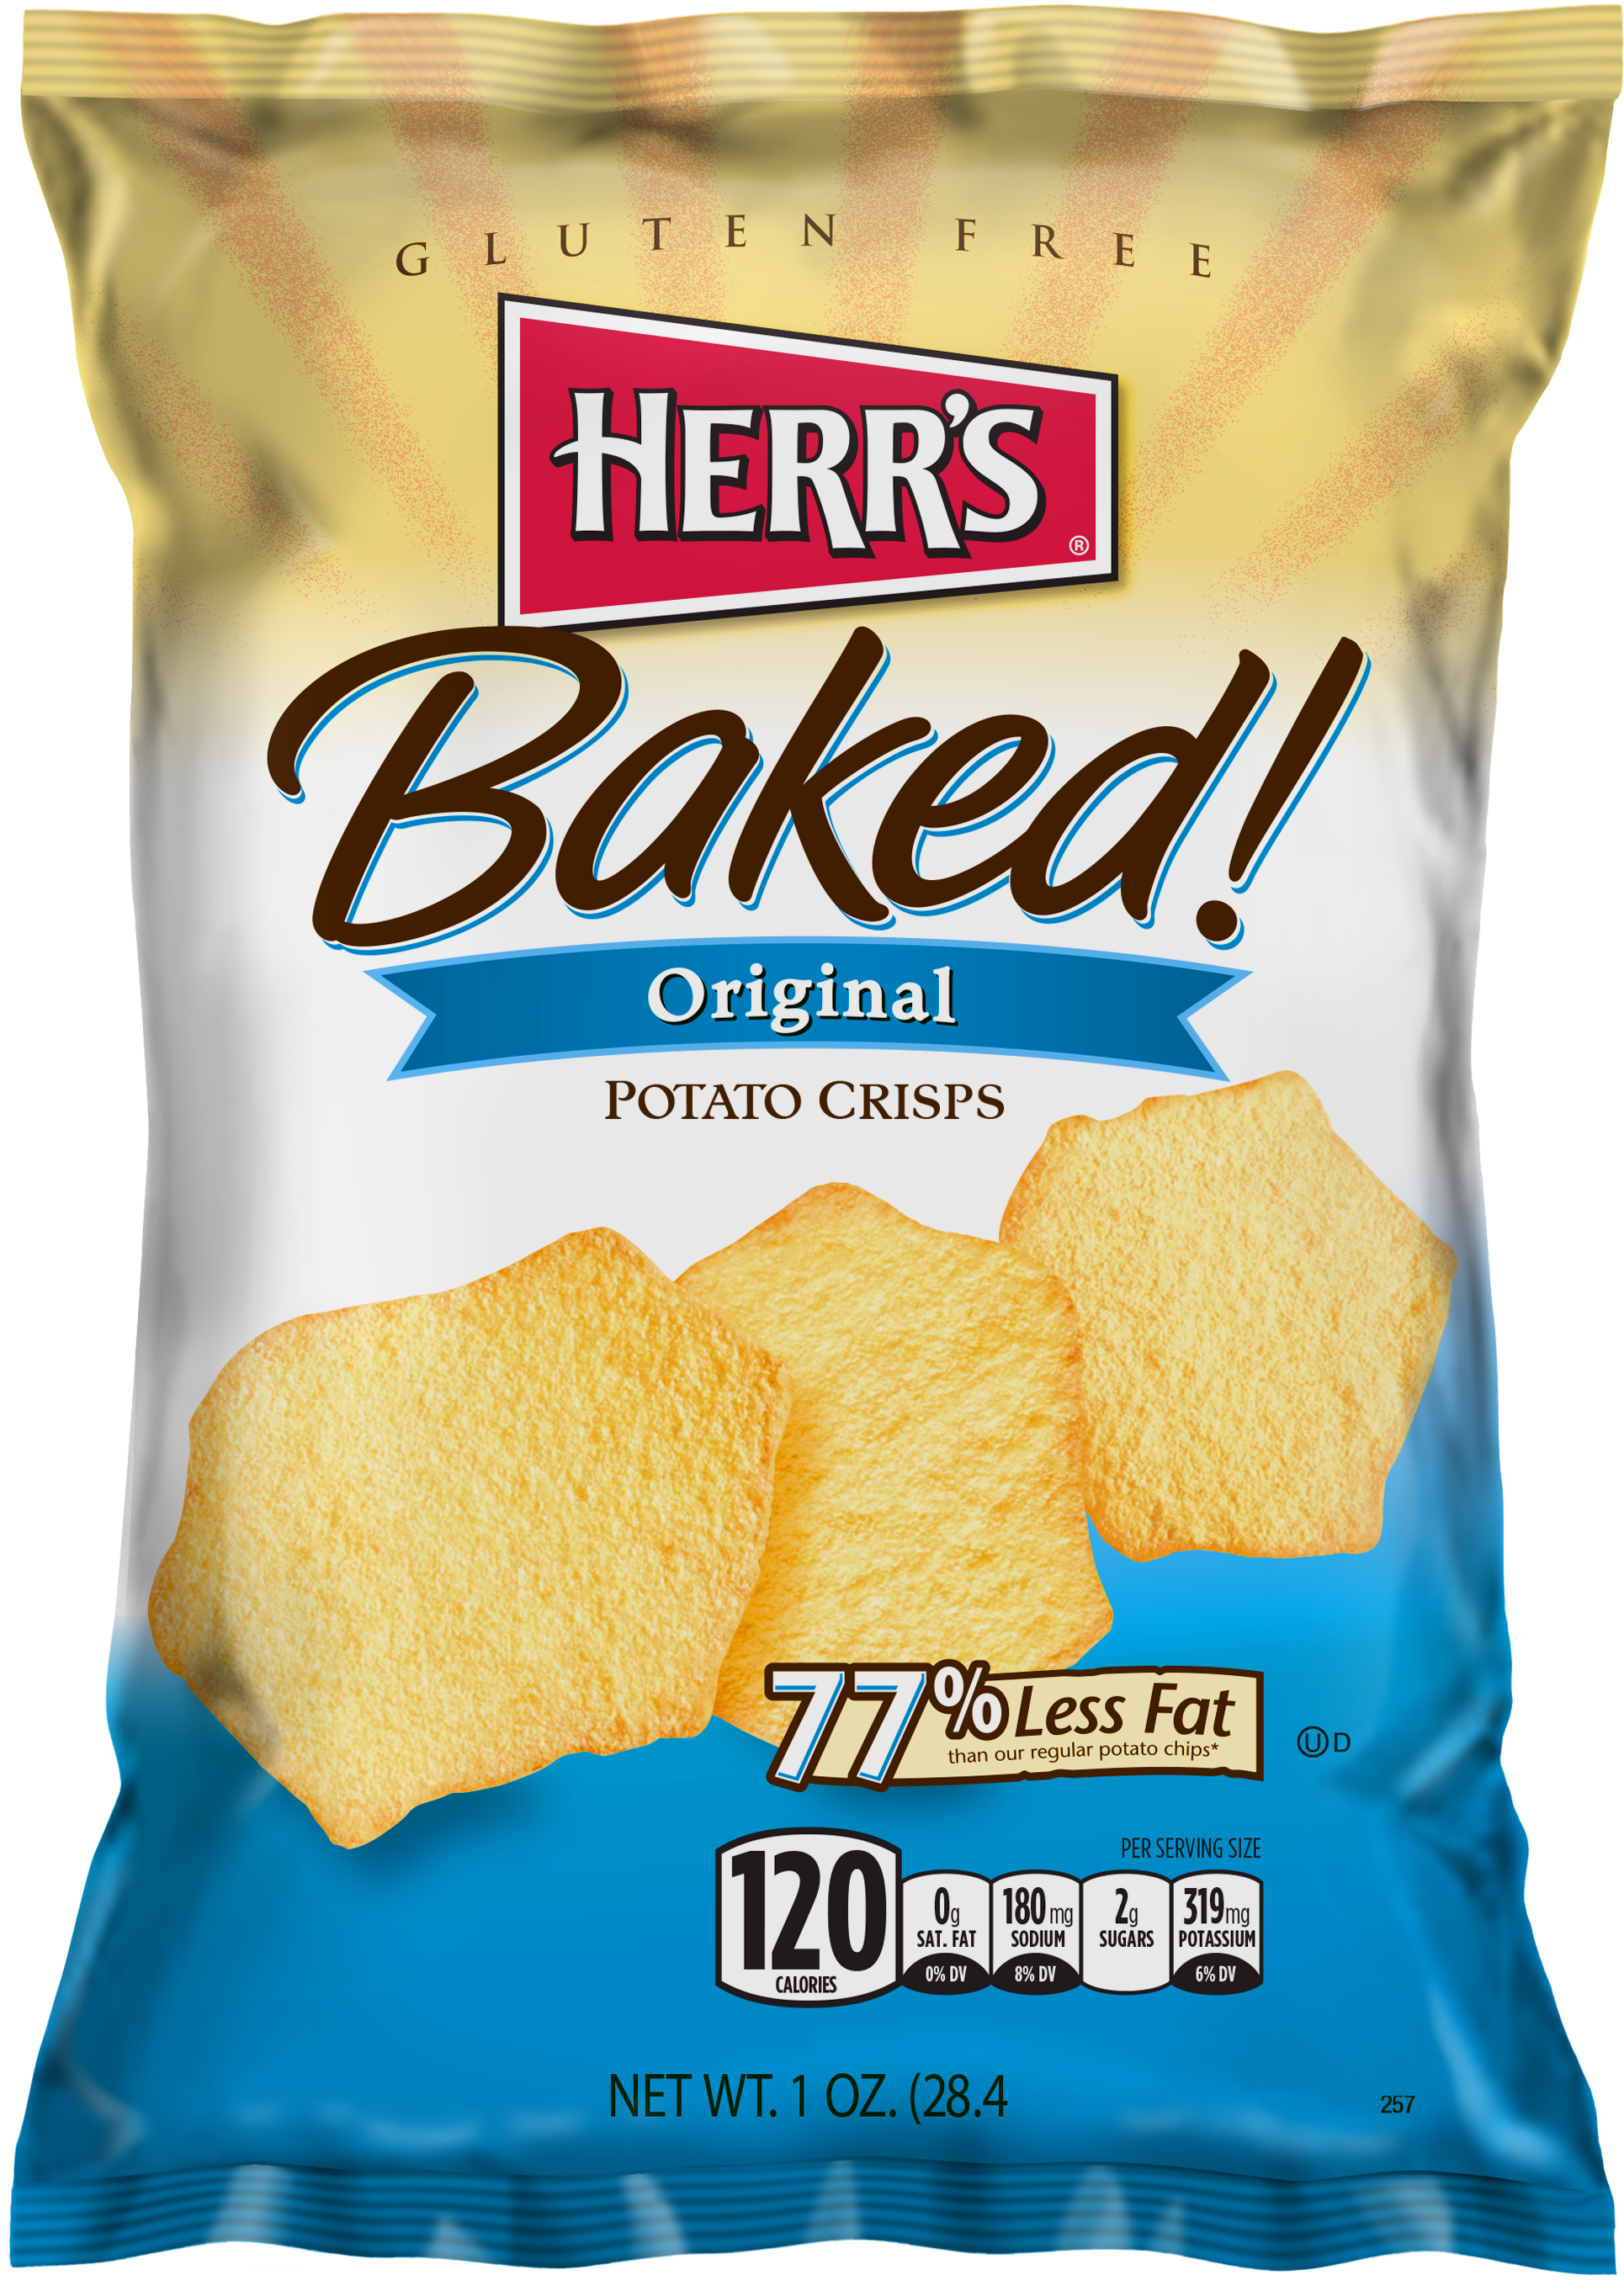 A Bag Of Potato Crisps